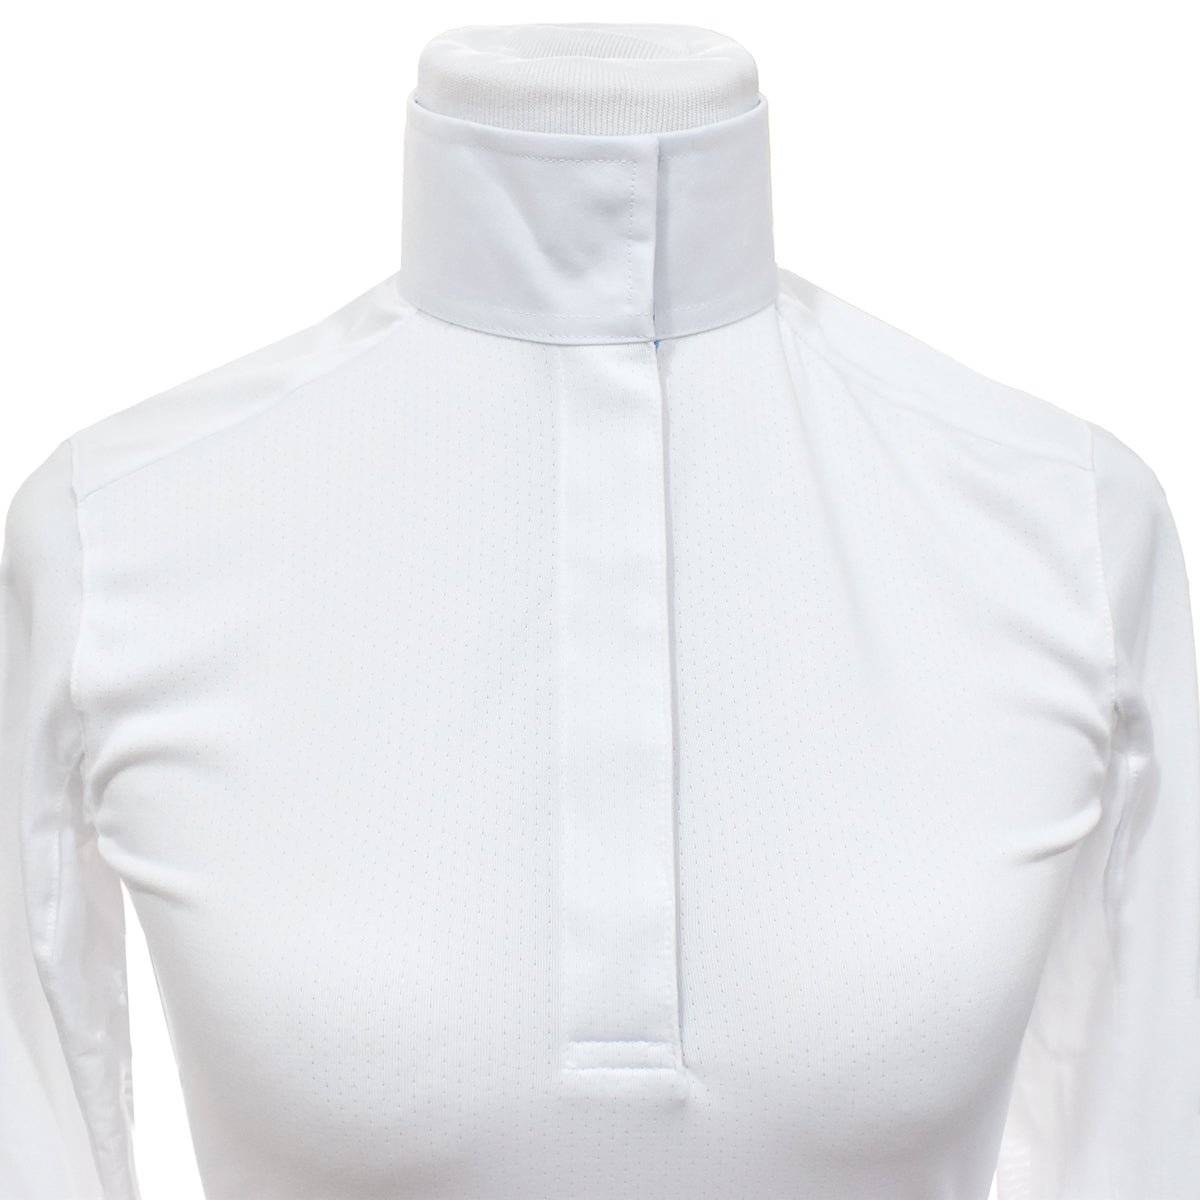 Essex Classics Girls "Roosters" Talent Yarn Straight Collar Long Sleeve Show Shirt